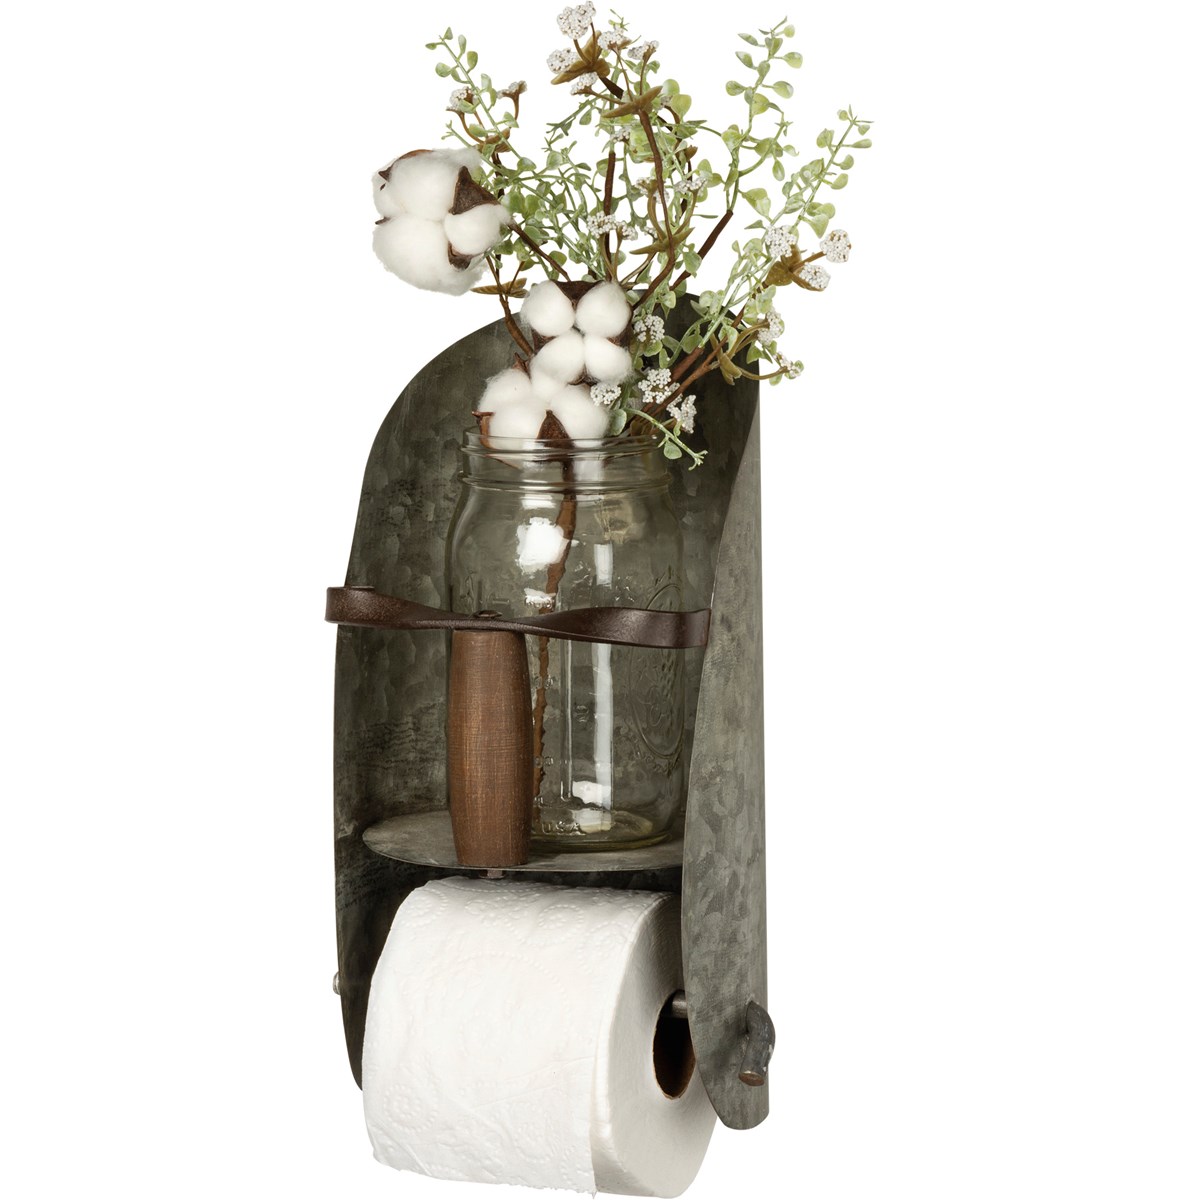 Toilet Paper Holder – The InSpirited Home